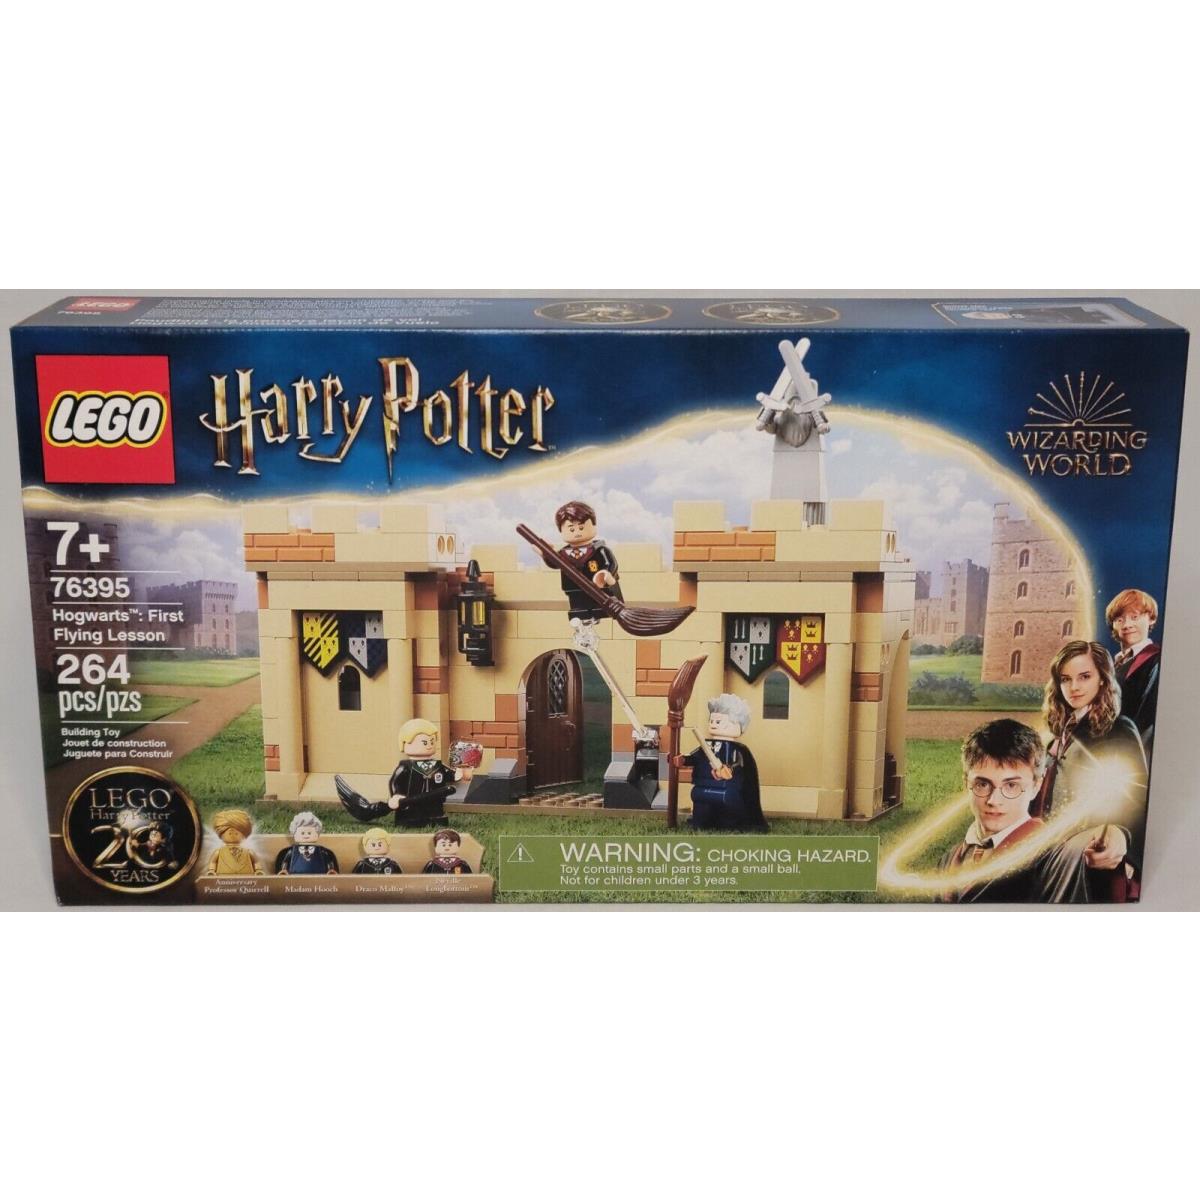 Lego 76395 Hogwarts First Flying Lesson Harry Potter Draco Malfoy Quirrell Hooch